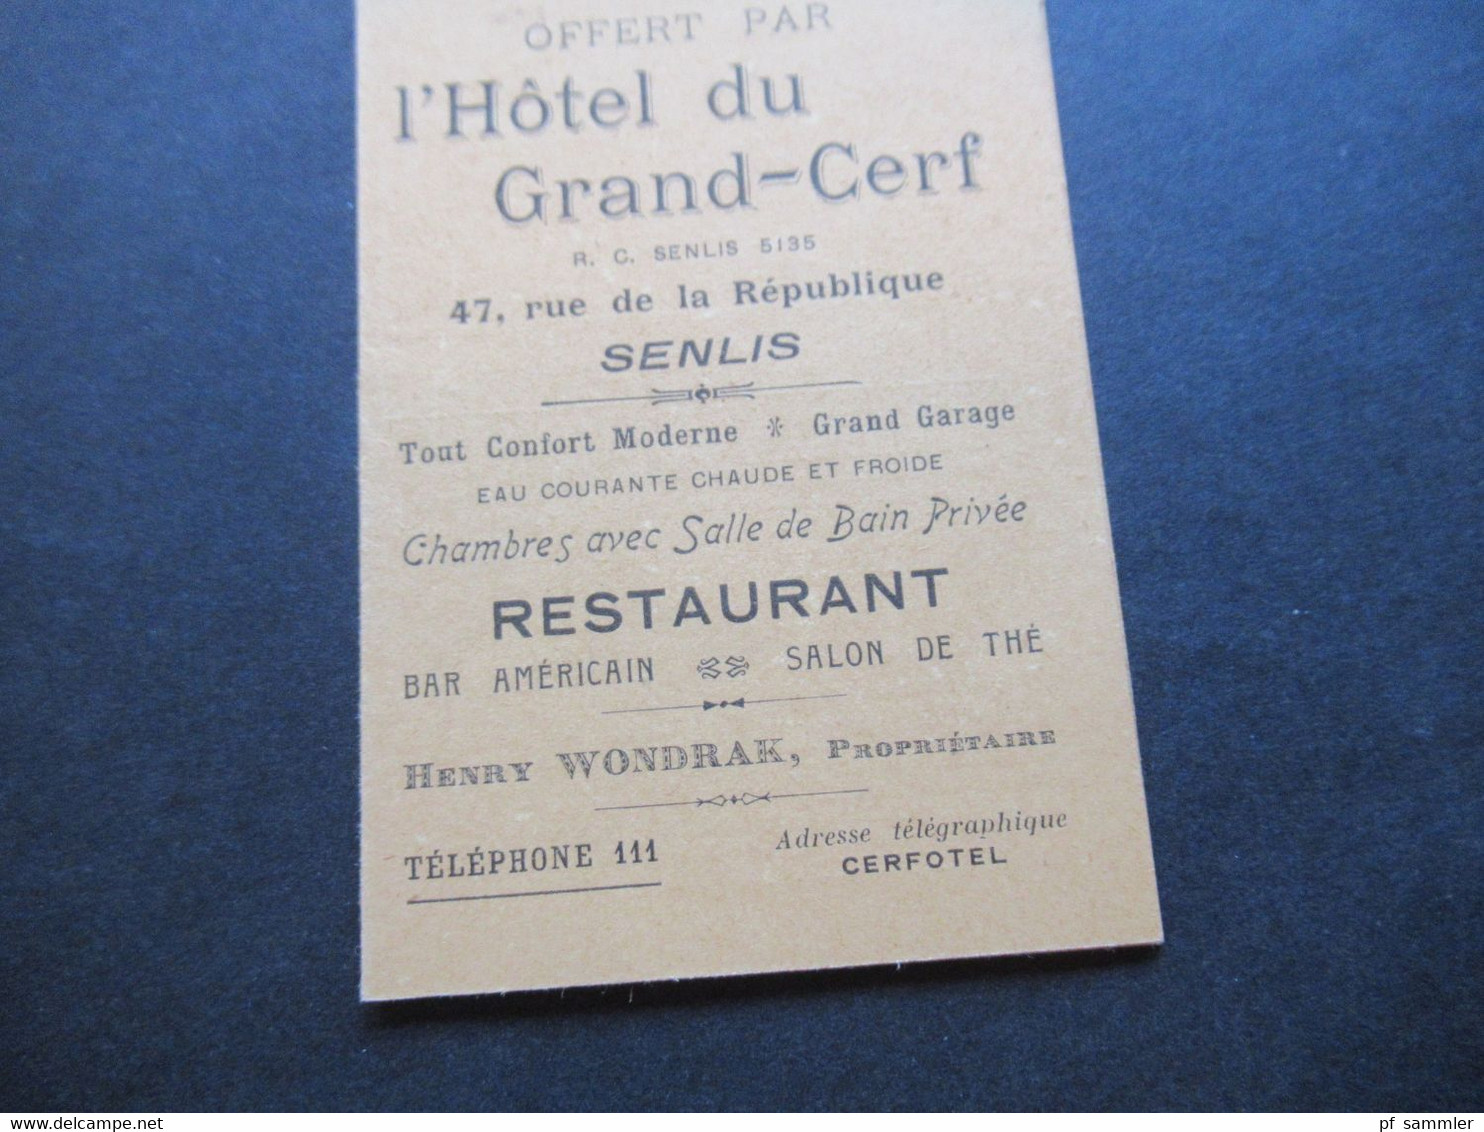 Frankreich Horaire Des Trains / Zugfahrplan Offert Par L'Hotel Du Grand Cerf Senlis Avec Restaurant Henry Wondrak - Europa